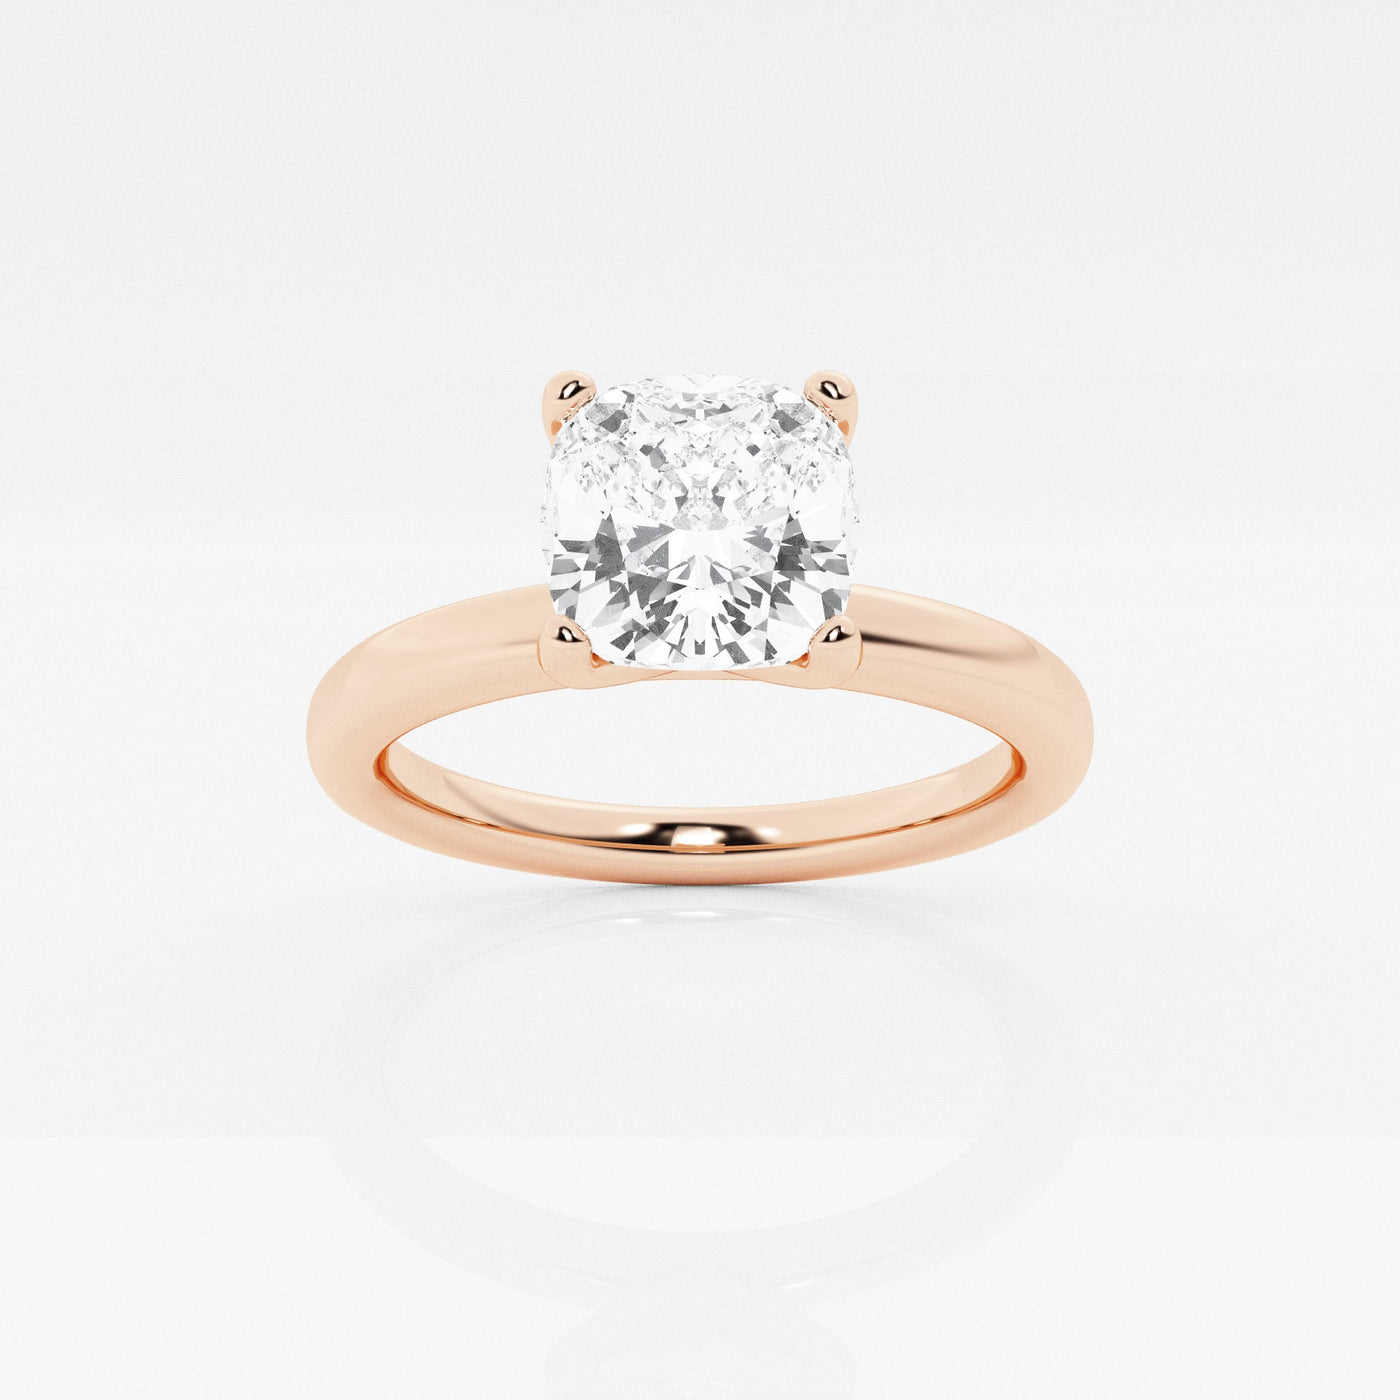 _main_image@SKU:LGR2598X2C150SOGS4~#carat_1.50#diamond-quality_fg,-vs2+#metal_18k-rose-gold